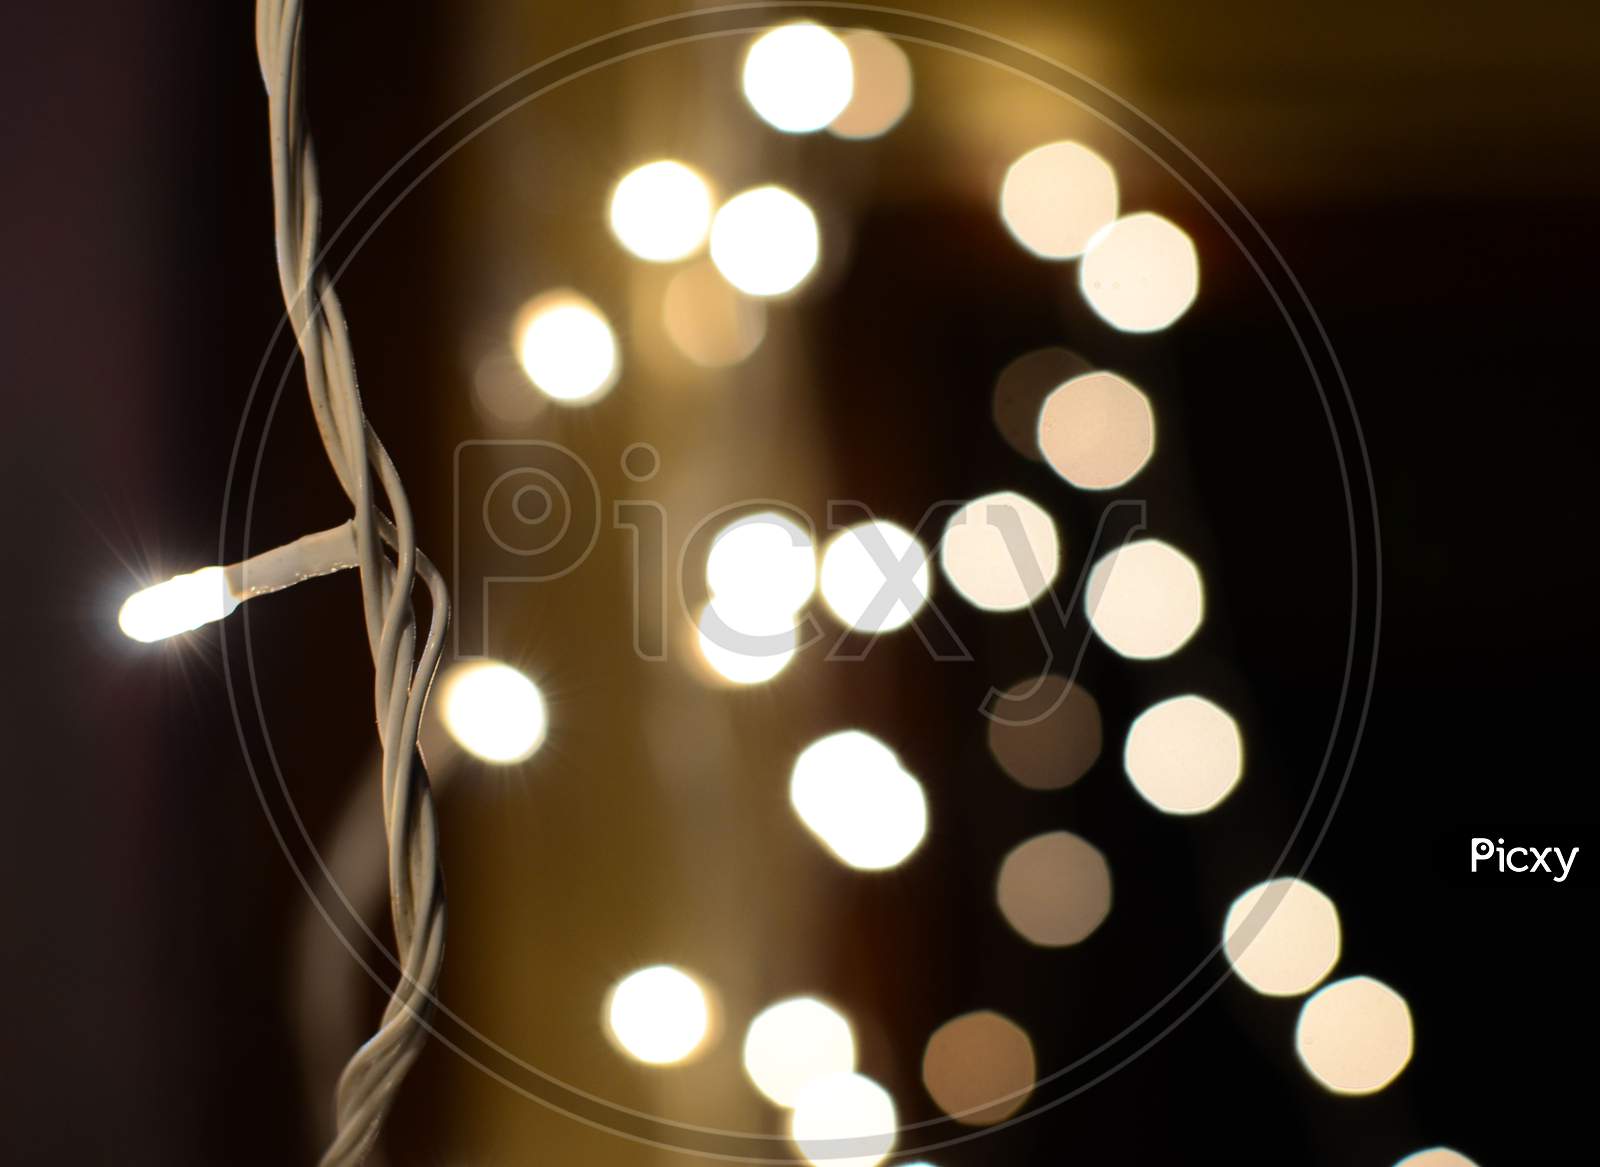 5847 Blur Diwali Lights Stock Photos Images  Photography  Shutterstock